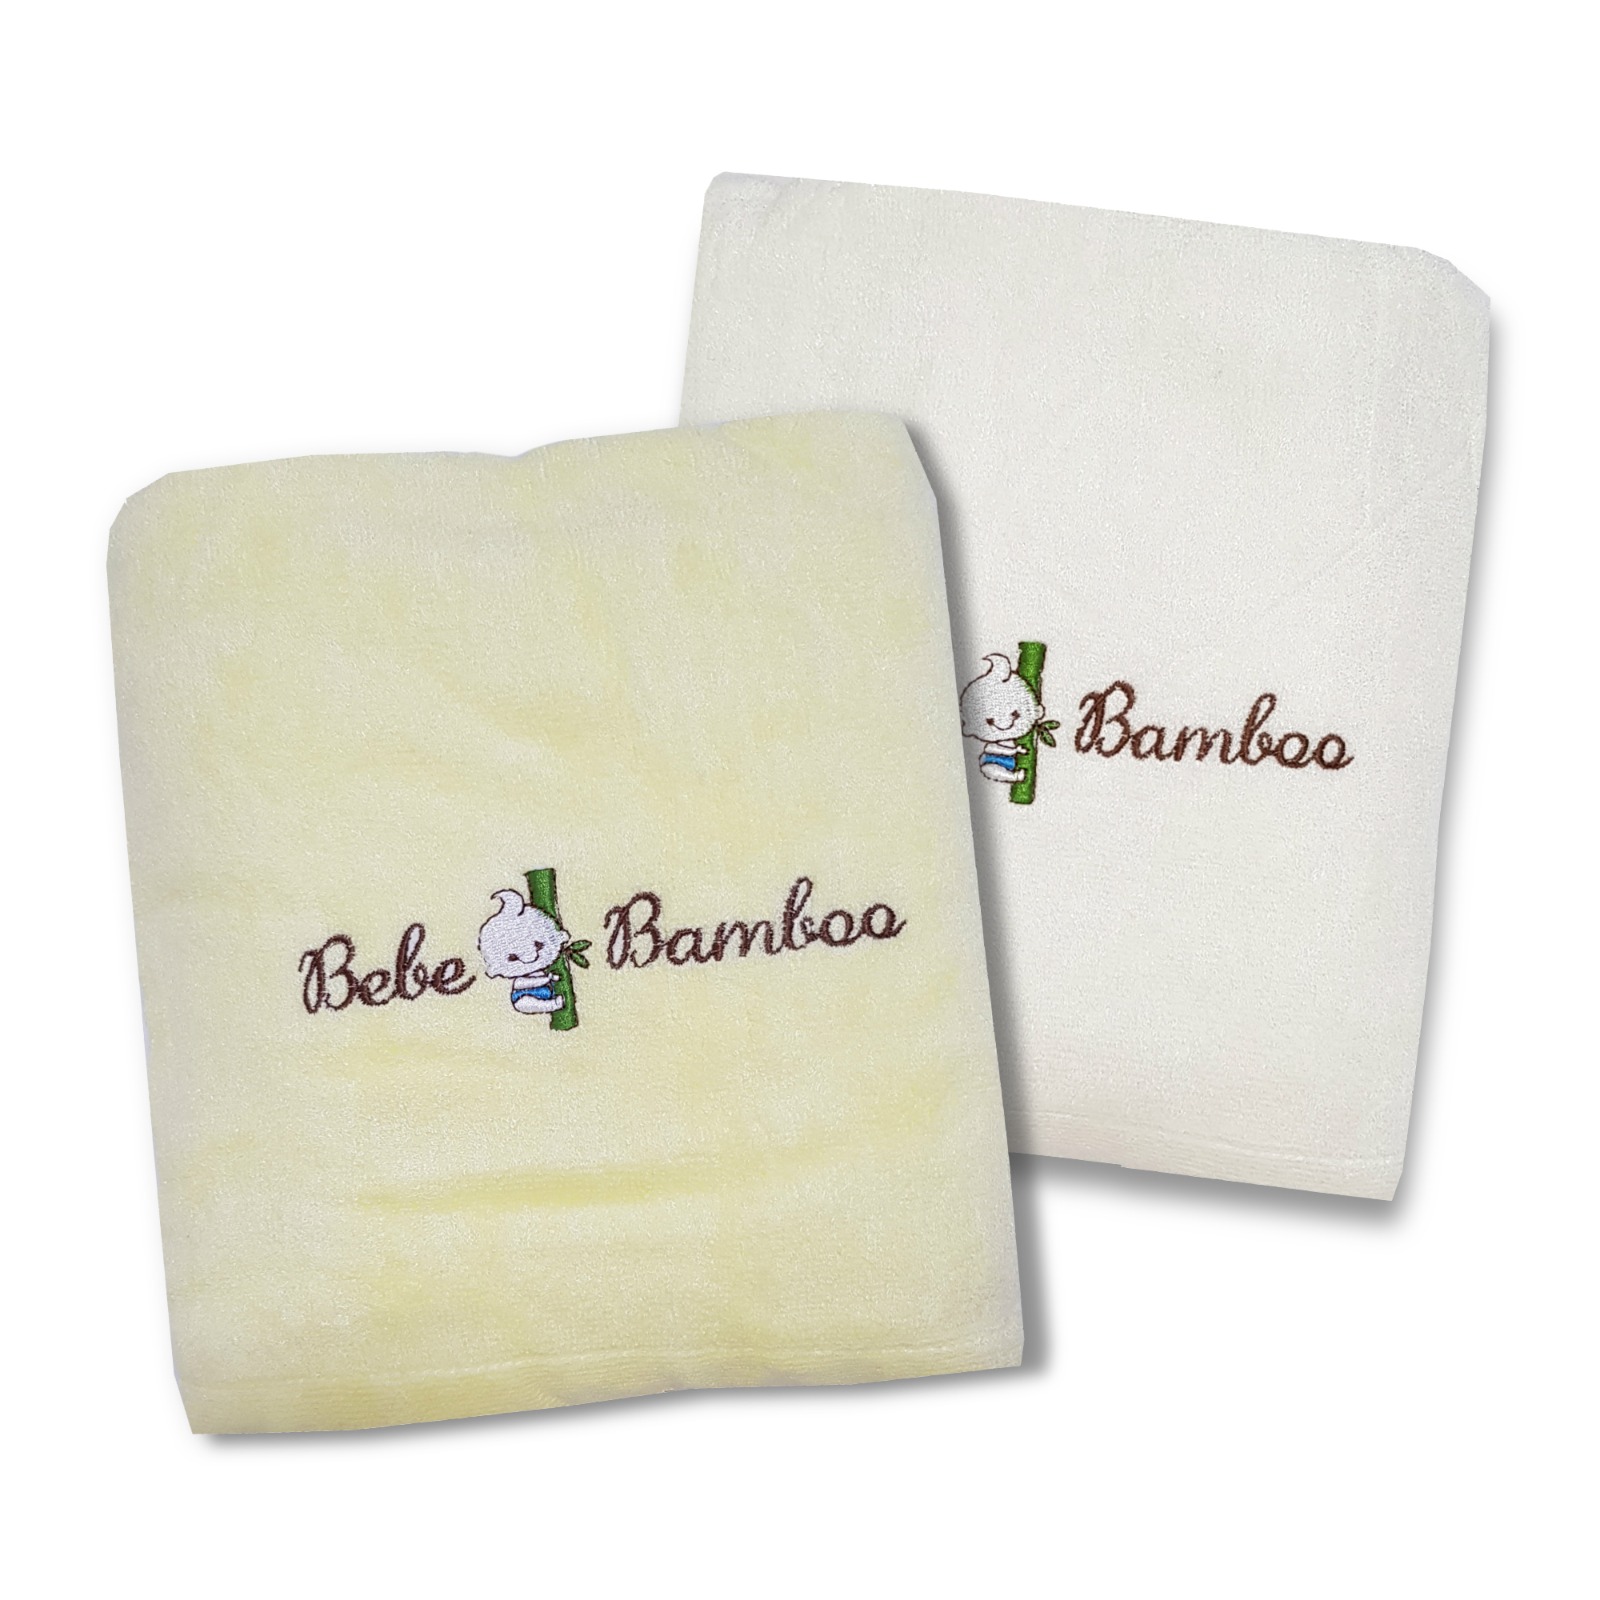 Bebe Bamboo 100% Bamboo Adult/Large Size Bath Towels (Bundle of 2)